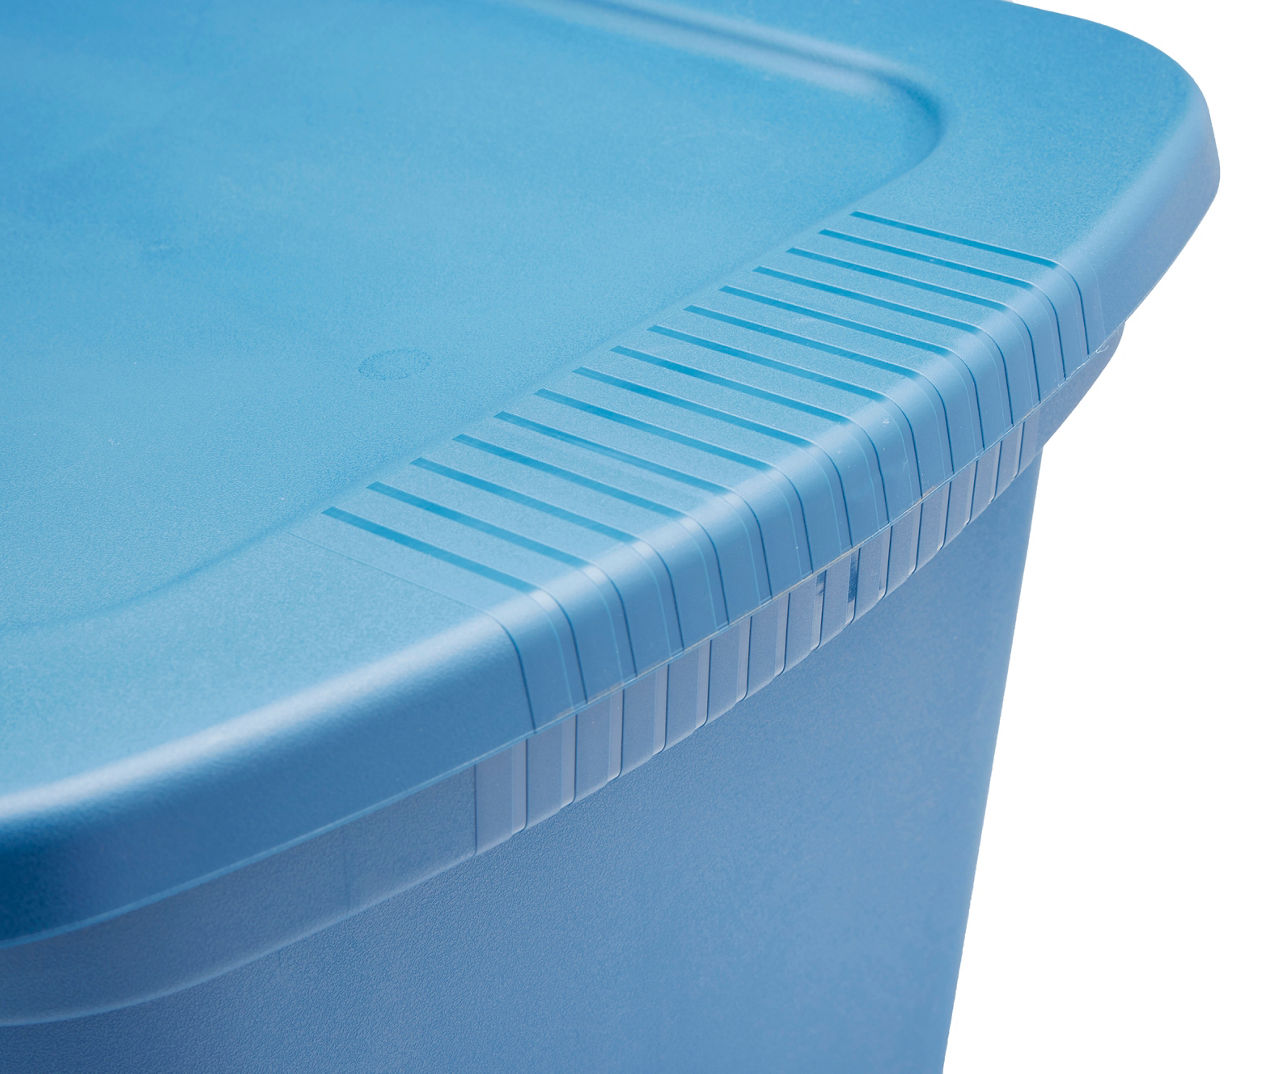 Sterilite 18 Gallon Storage Box - Marine Blue, 18 gal - Fry's Food Stores